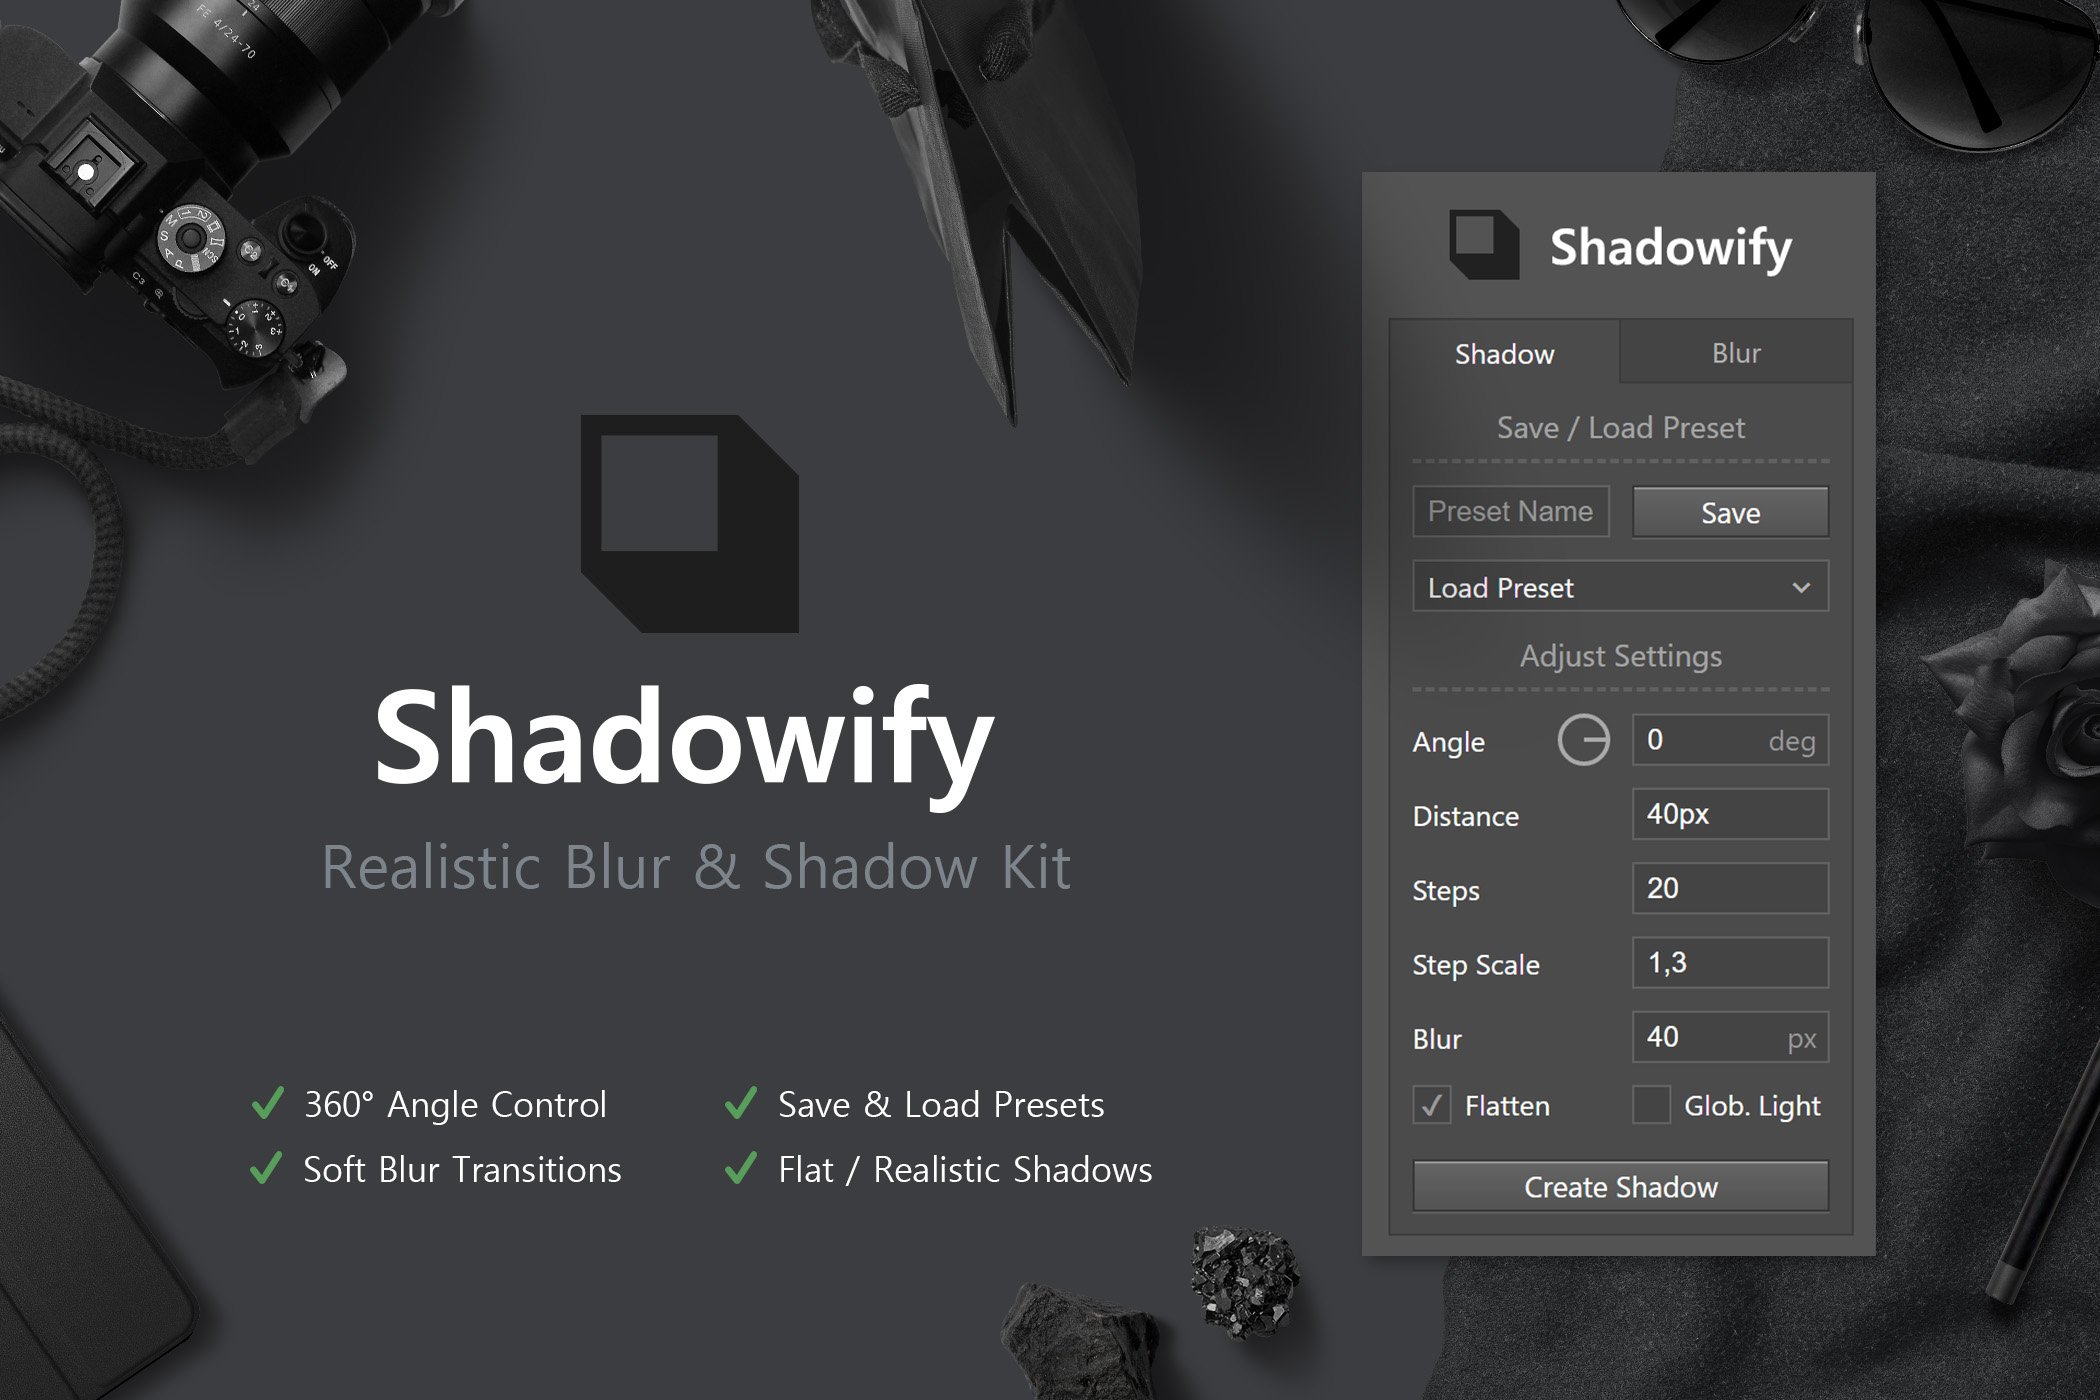 Shadowify - Blur & Shadow Kitcover image.